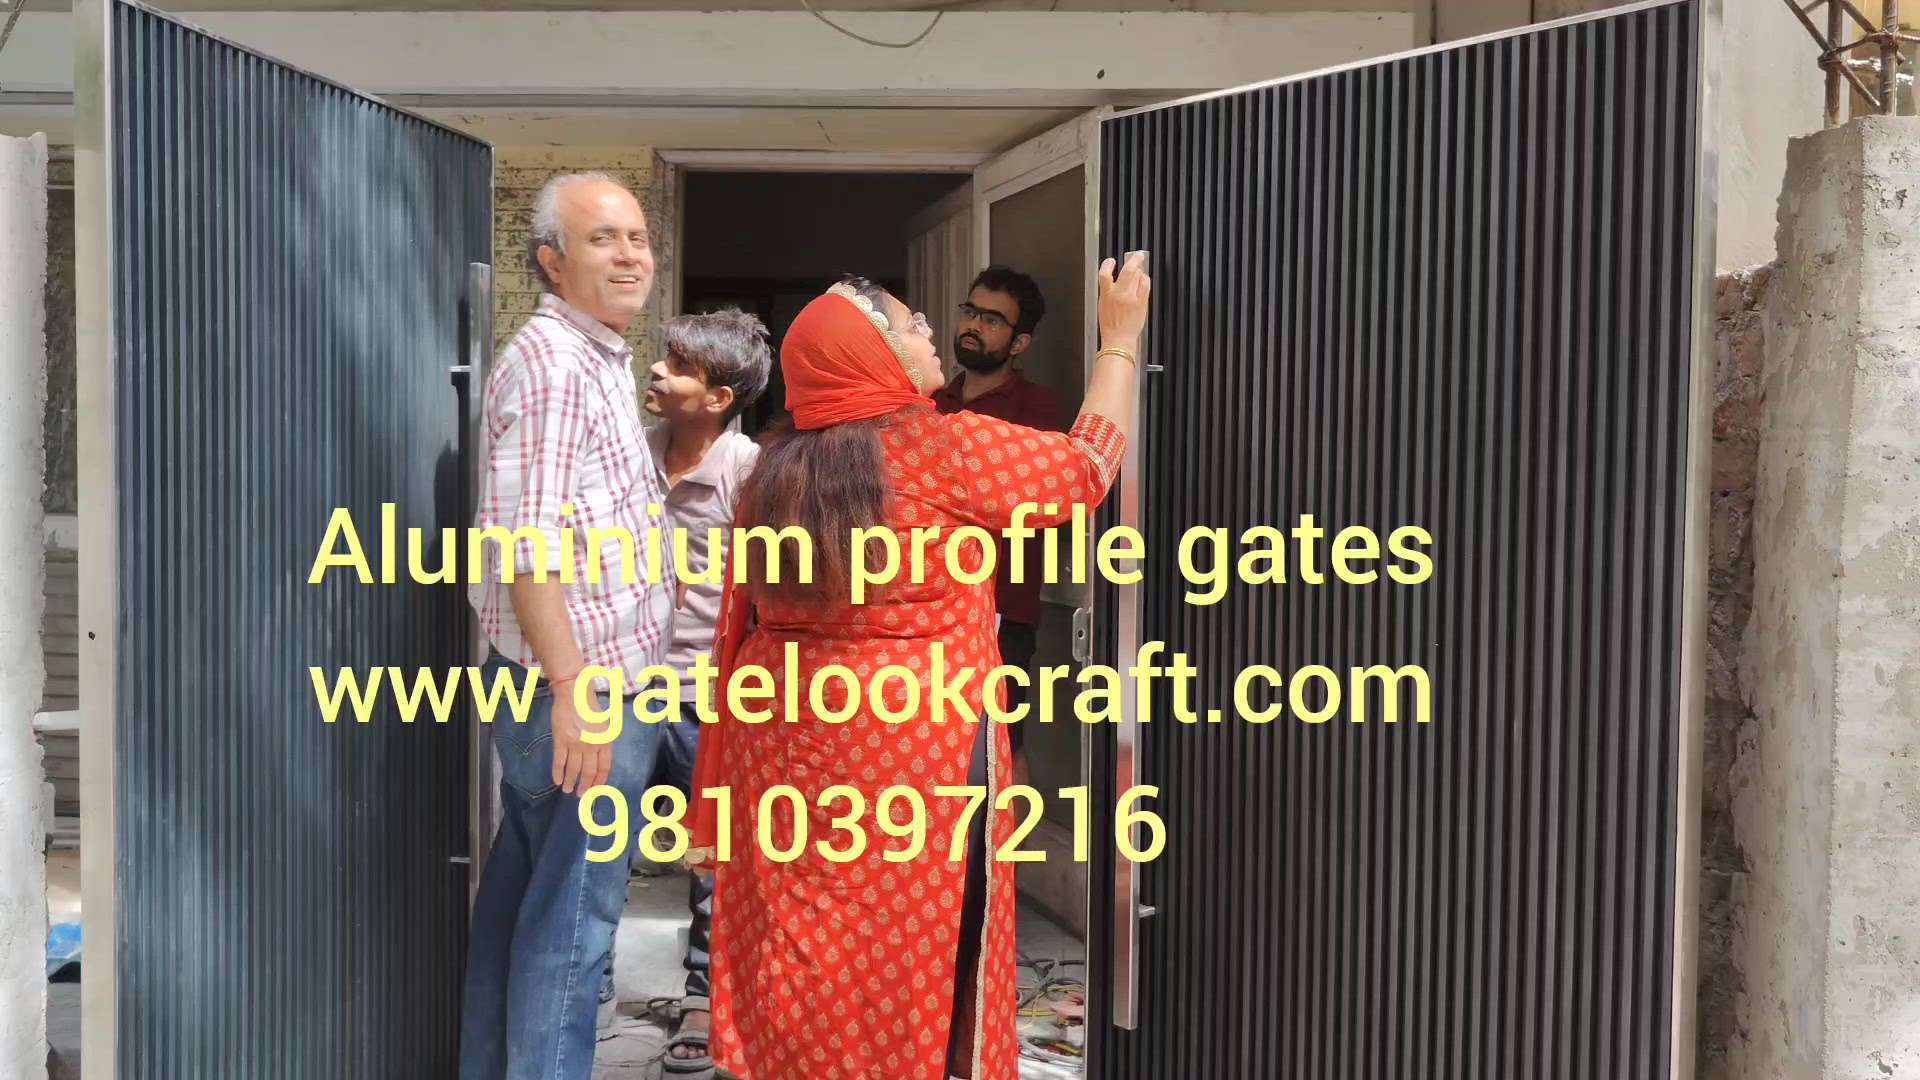 Aluminium profile gates by Hibza sterling interiors pvt ltd #gatelookcraft #aluminiumprofilegates #interiors #architectgatedesign #gates #gatedesign #modulargate